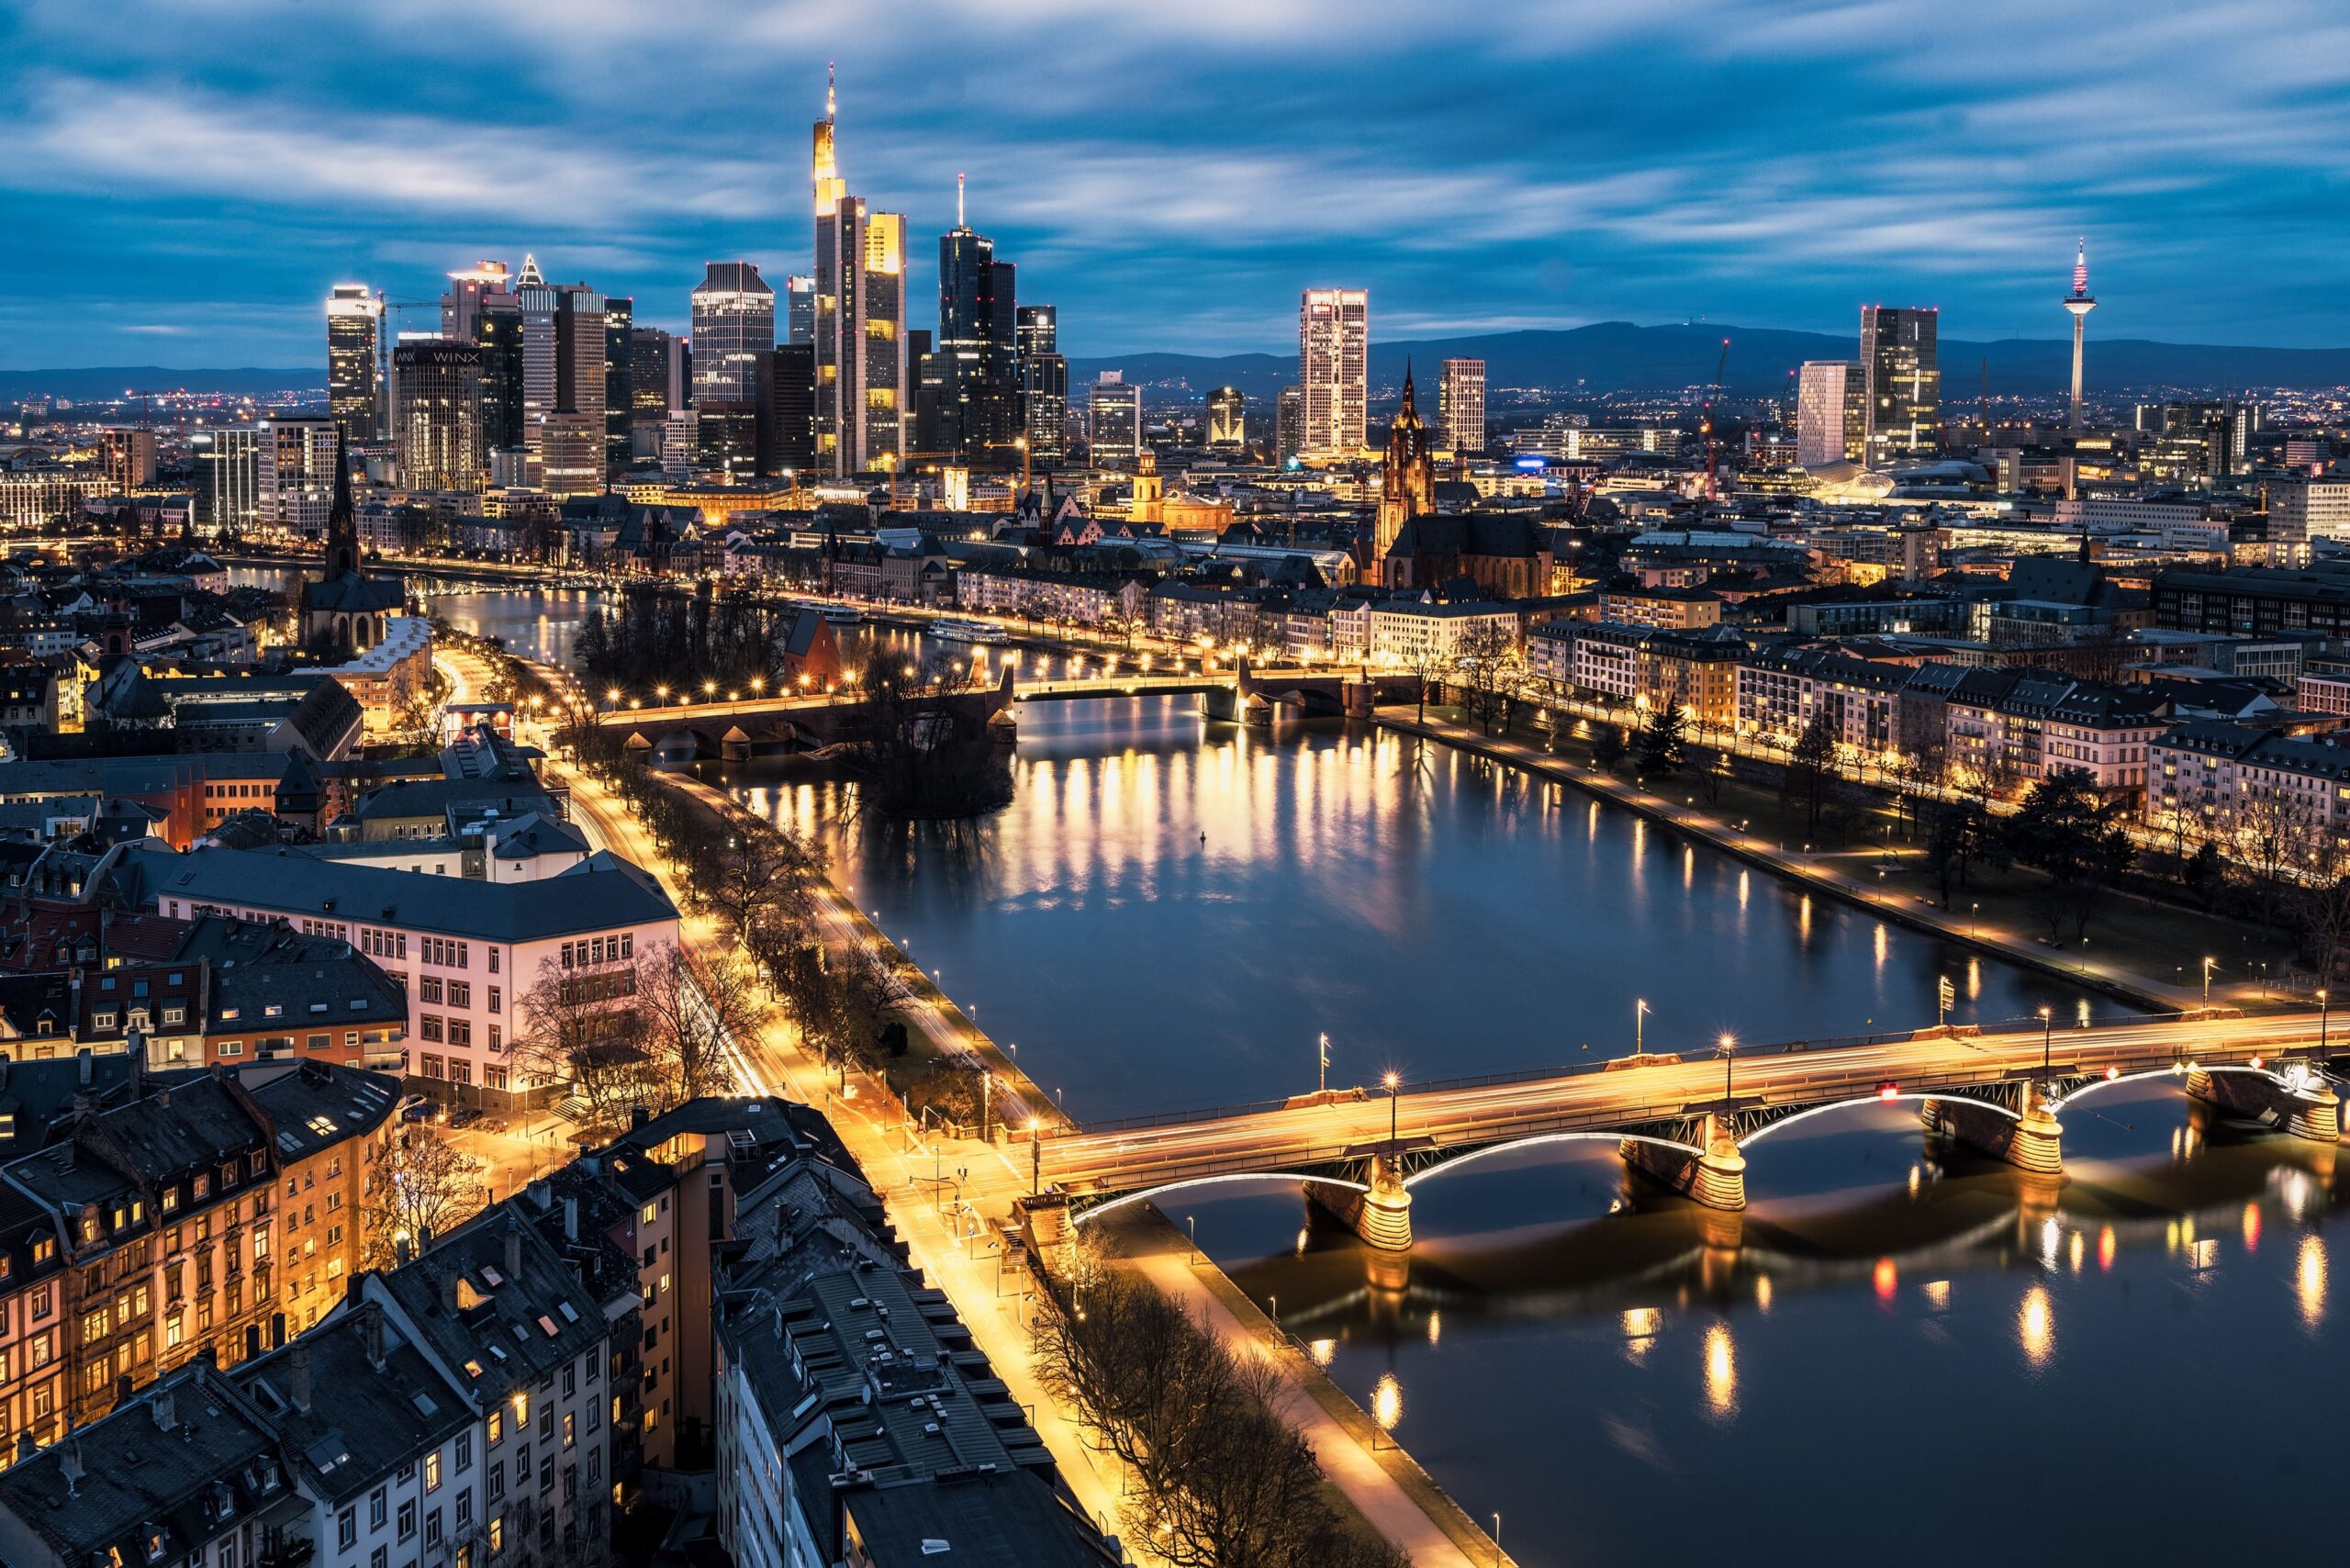 Frankfurt Germany VIVA Cruises review